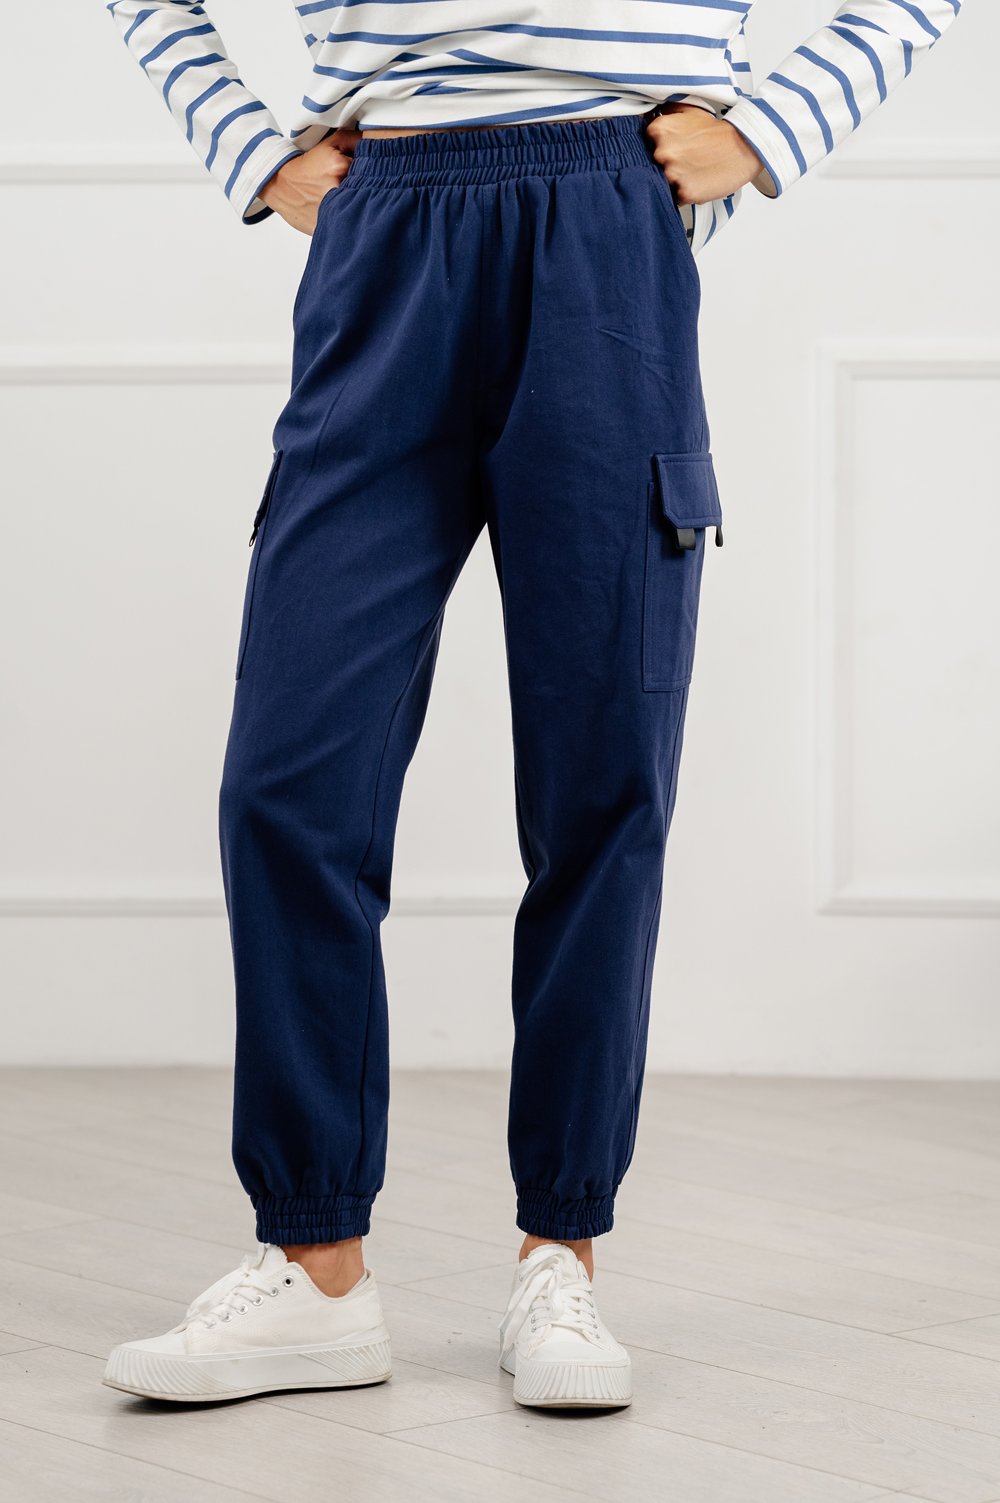 True North Gear, Dragonwear Introduces High Line™ Pant | Fire news